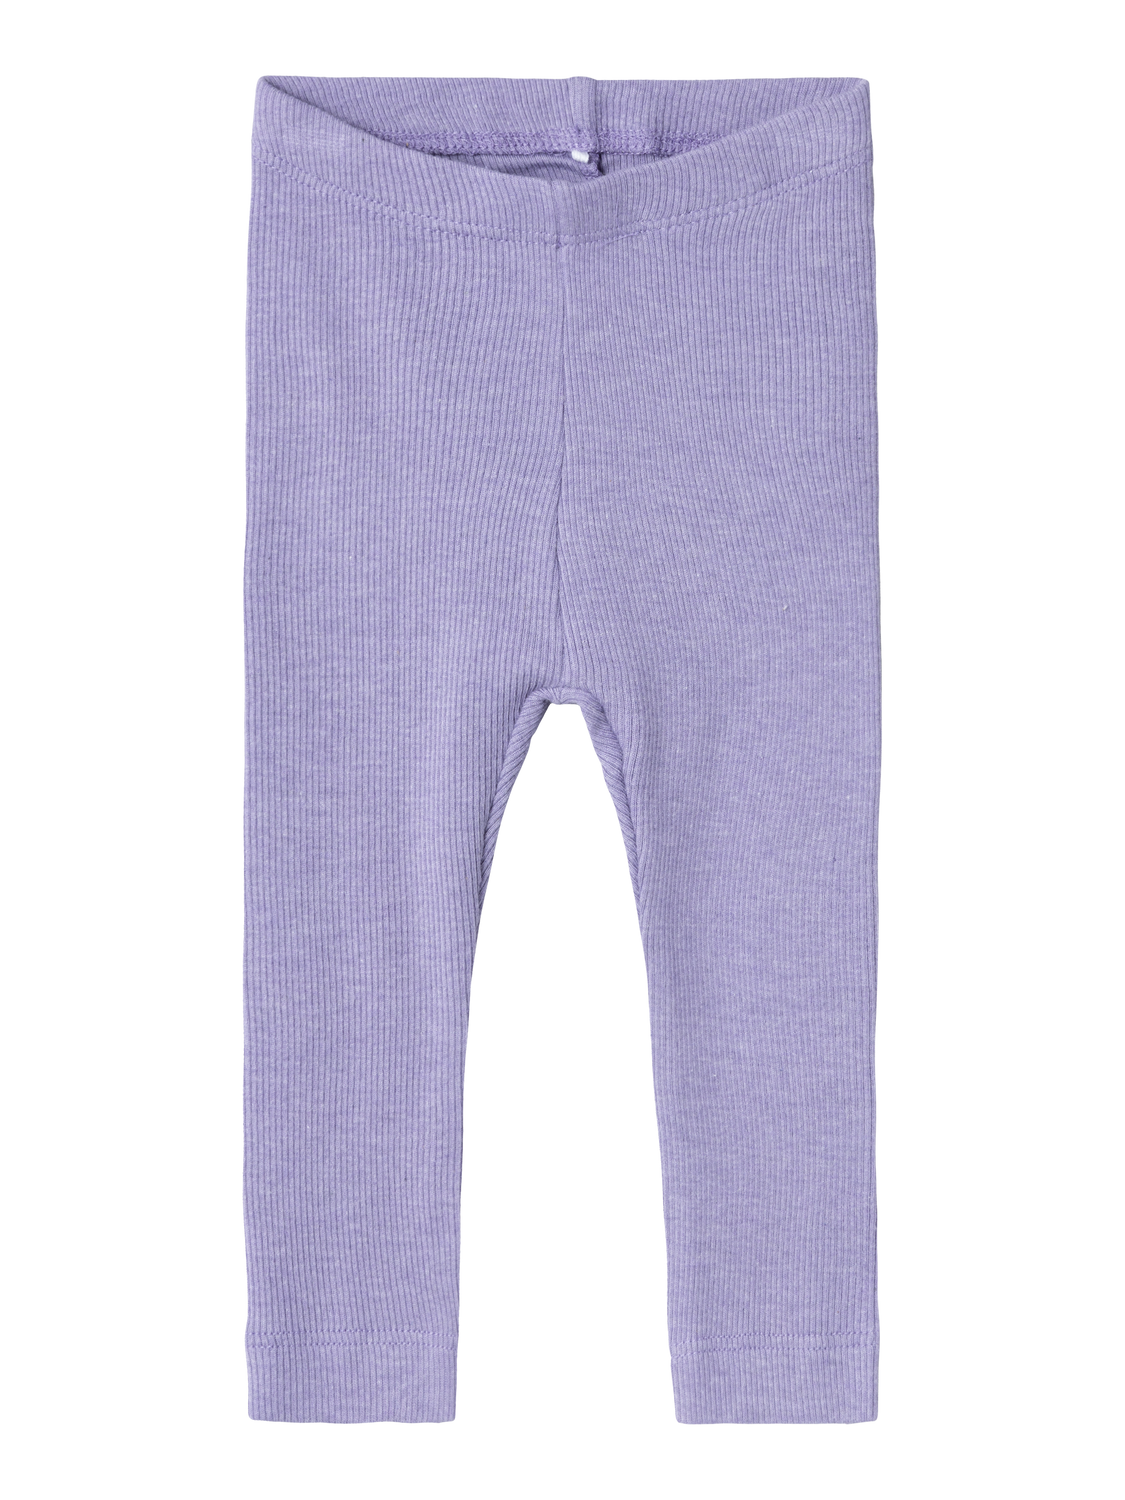 NBNKAB Trousers - Heirloom Lilac